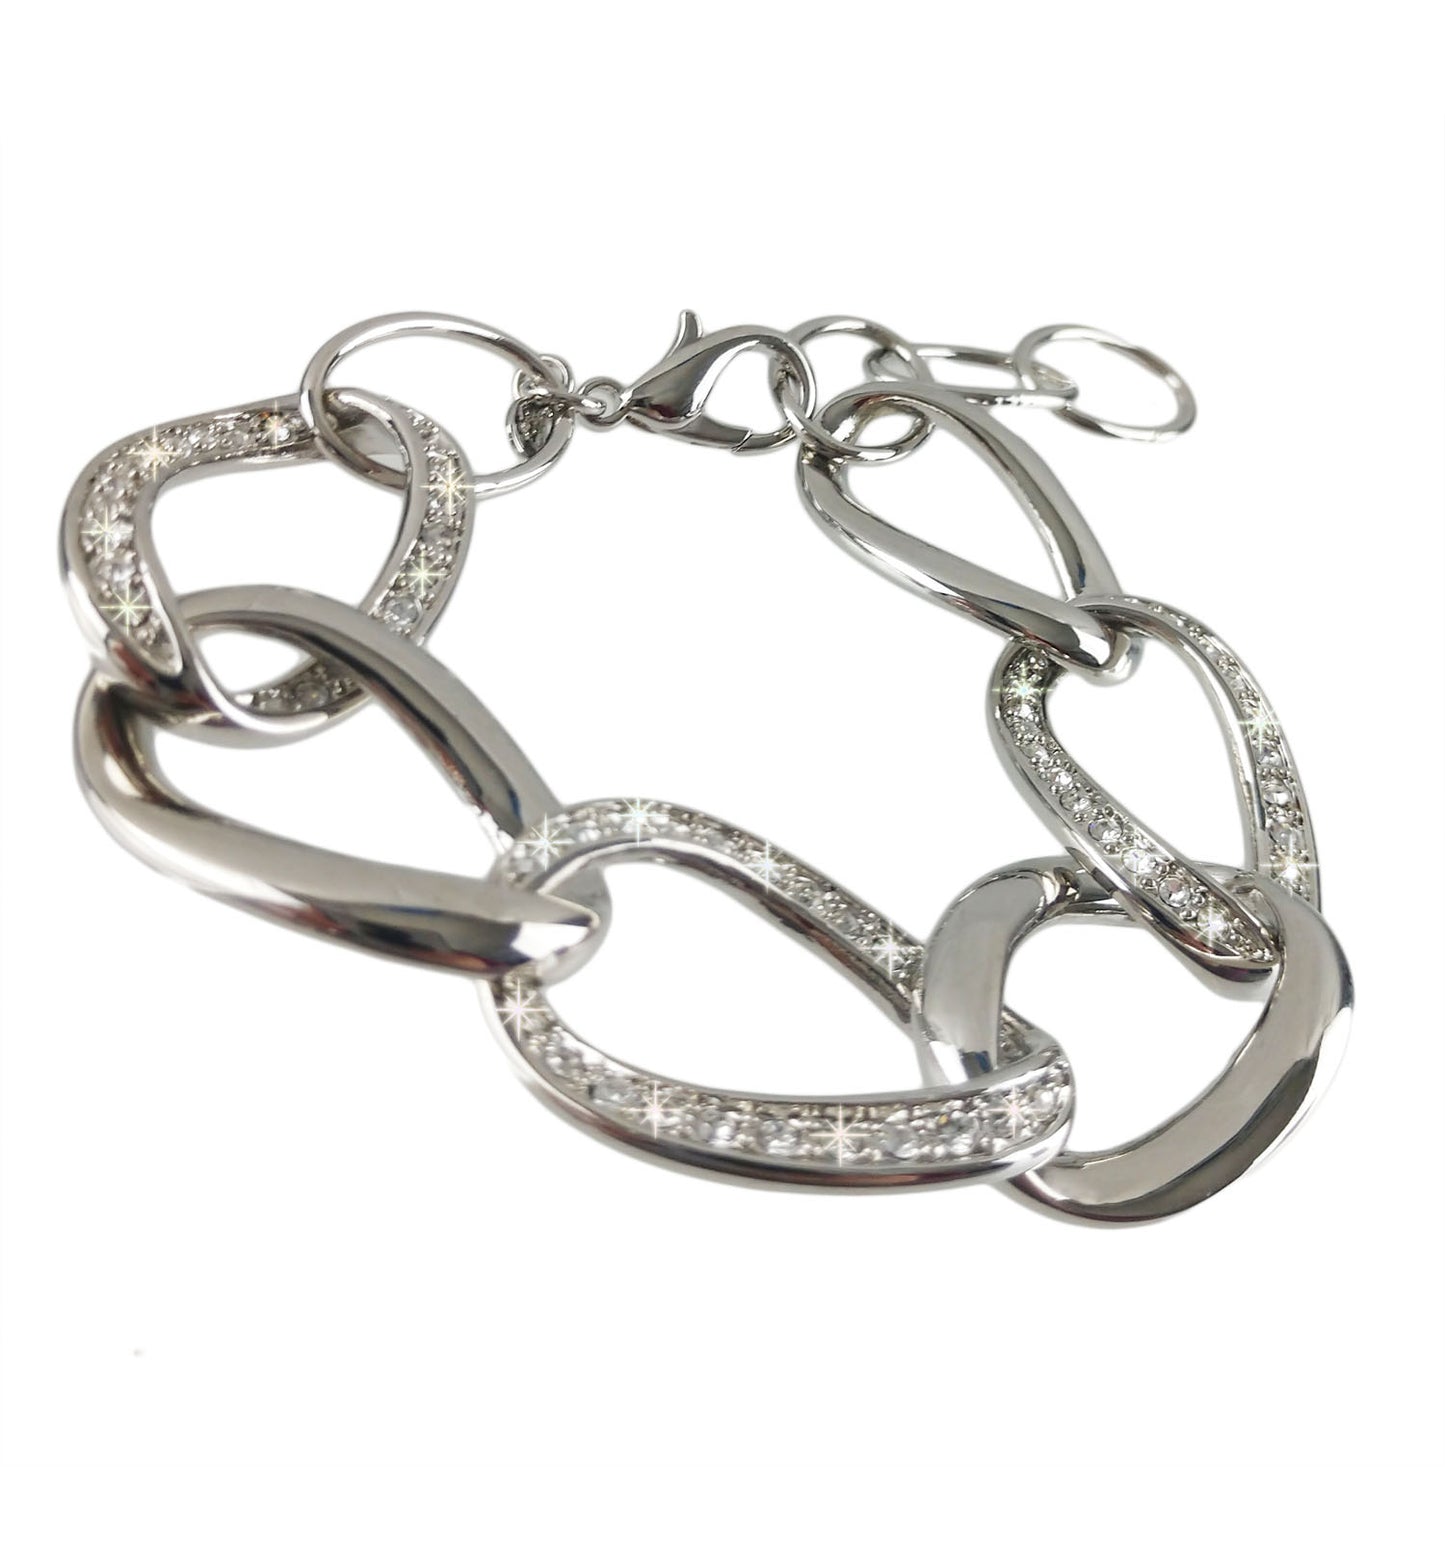 Premier Designs Large Silver Tone Crystal Punk Chain Link Bracelet NWOT 7.25-9"